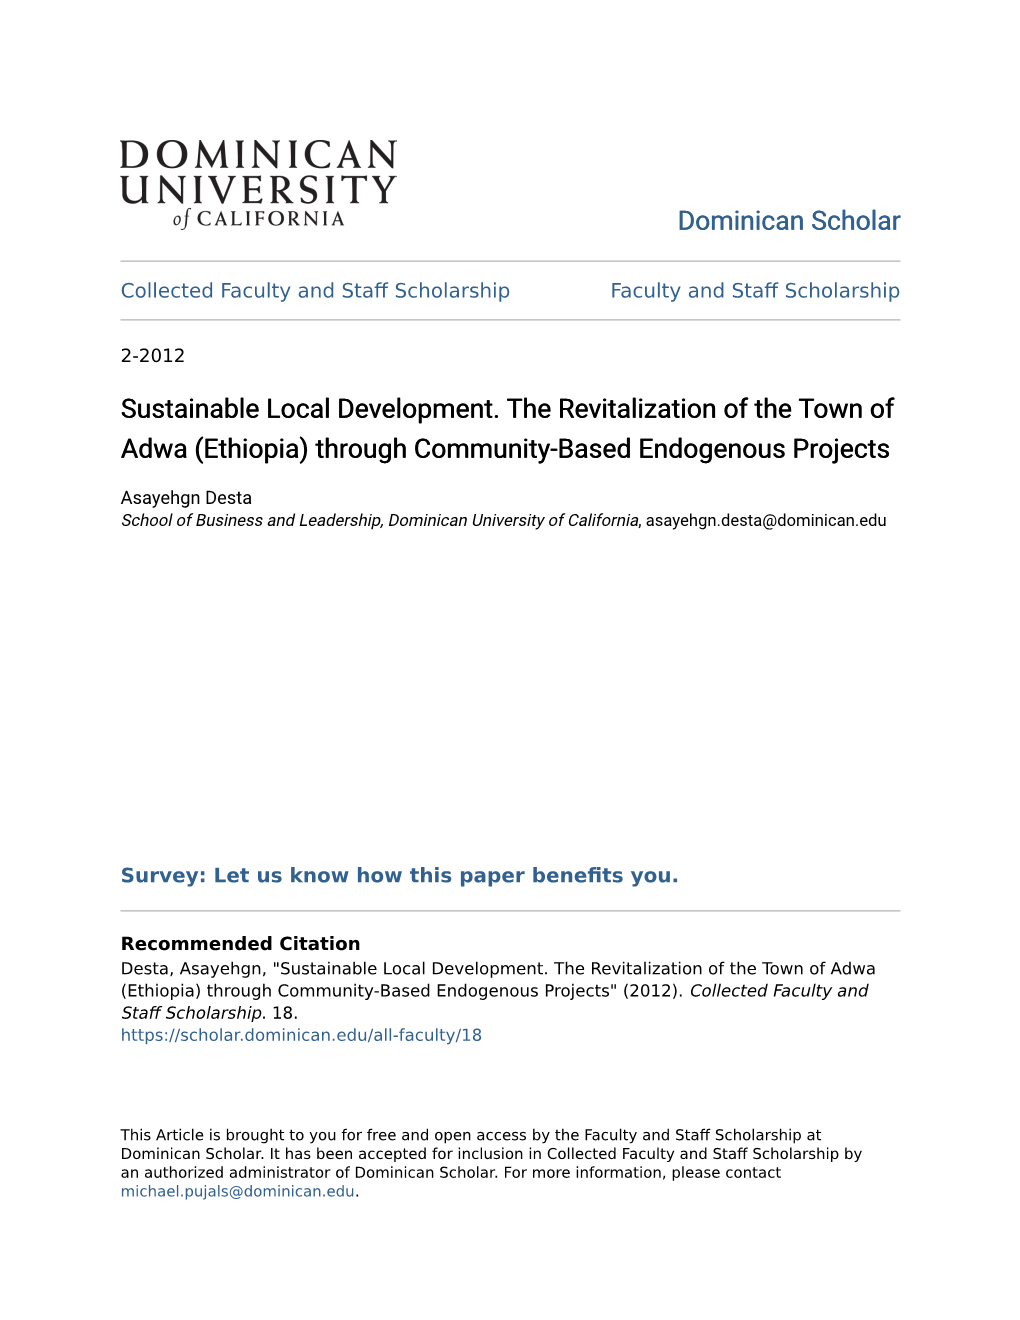 Ethiopia) Through Community-Based Endogenous Projects